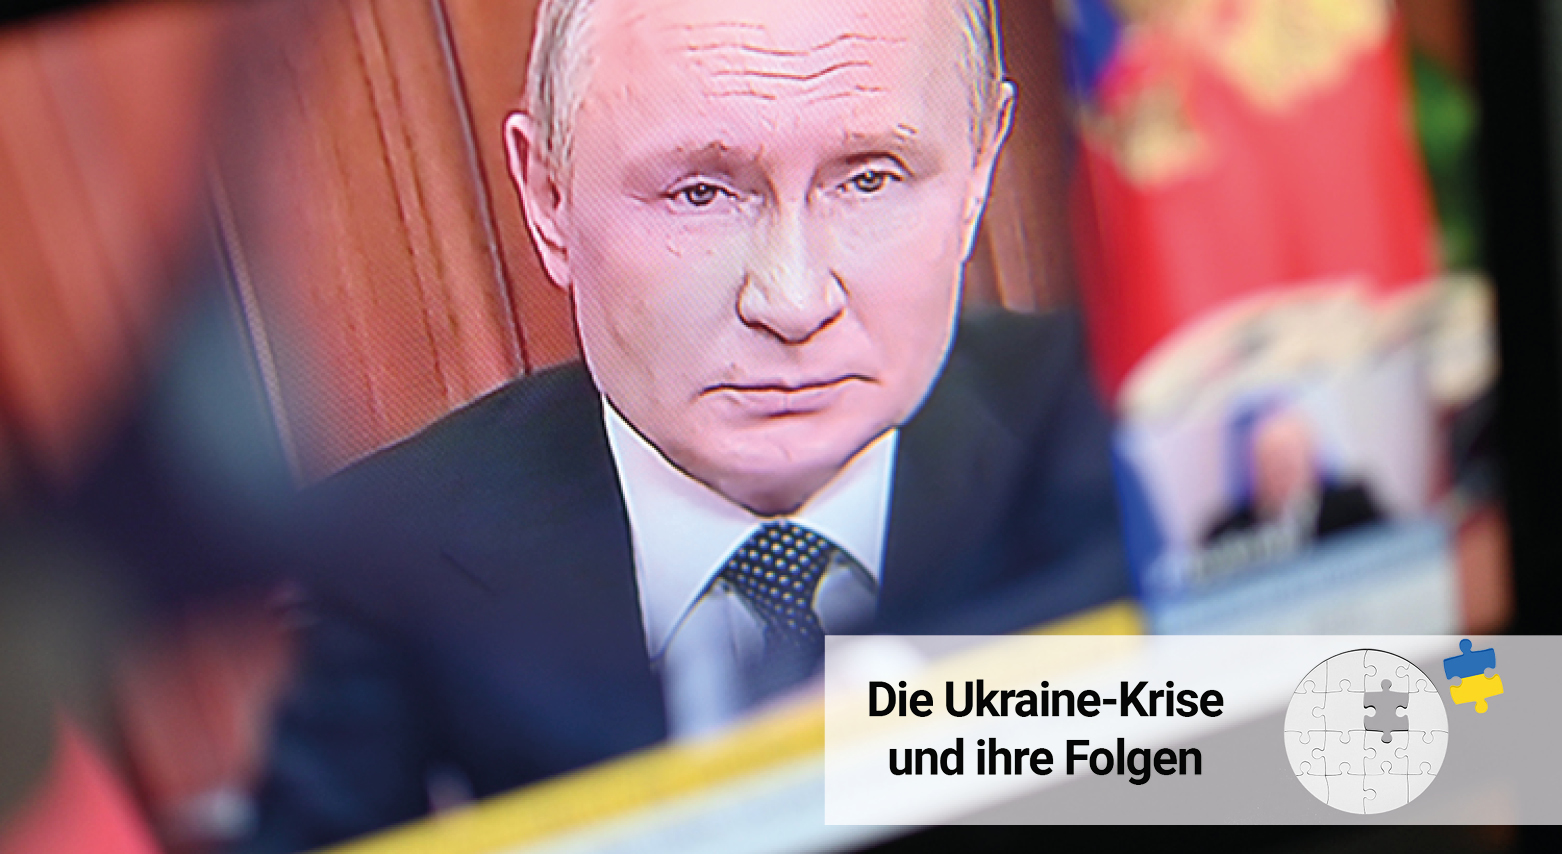 Vladimir Putin's Face on a TV-Screen